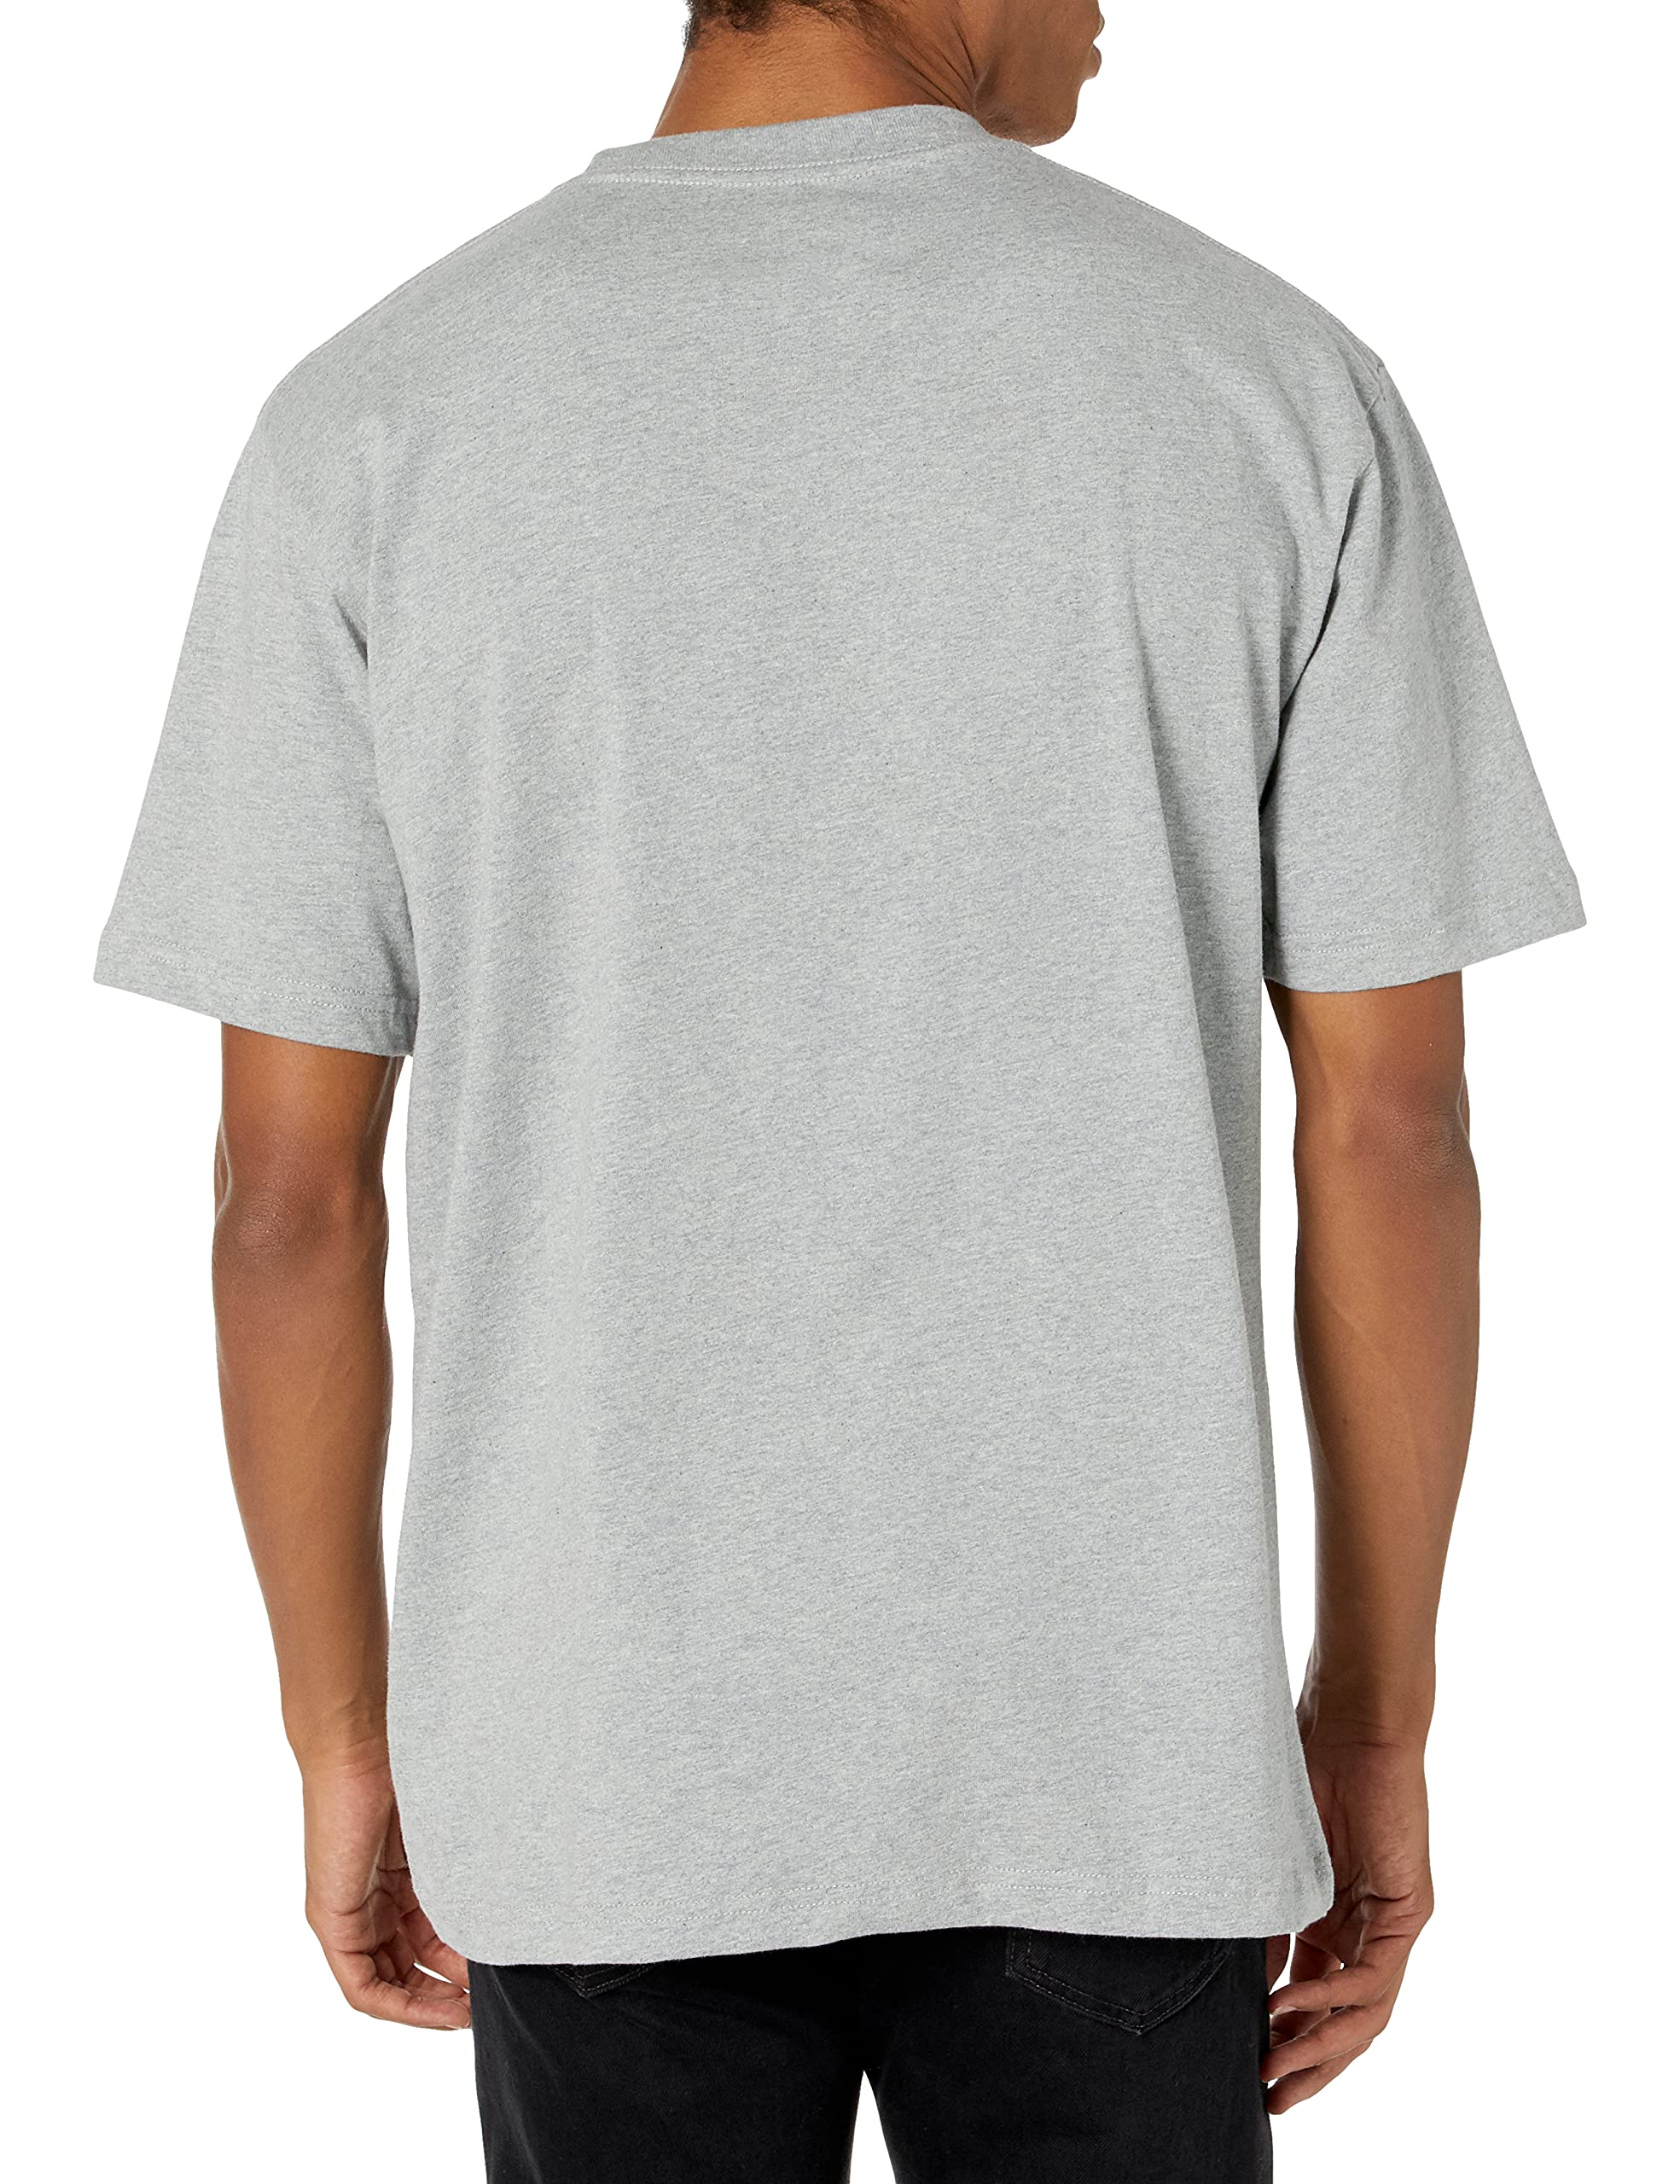 DC Men's Star Logo Short Sleeve Tee Shirt